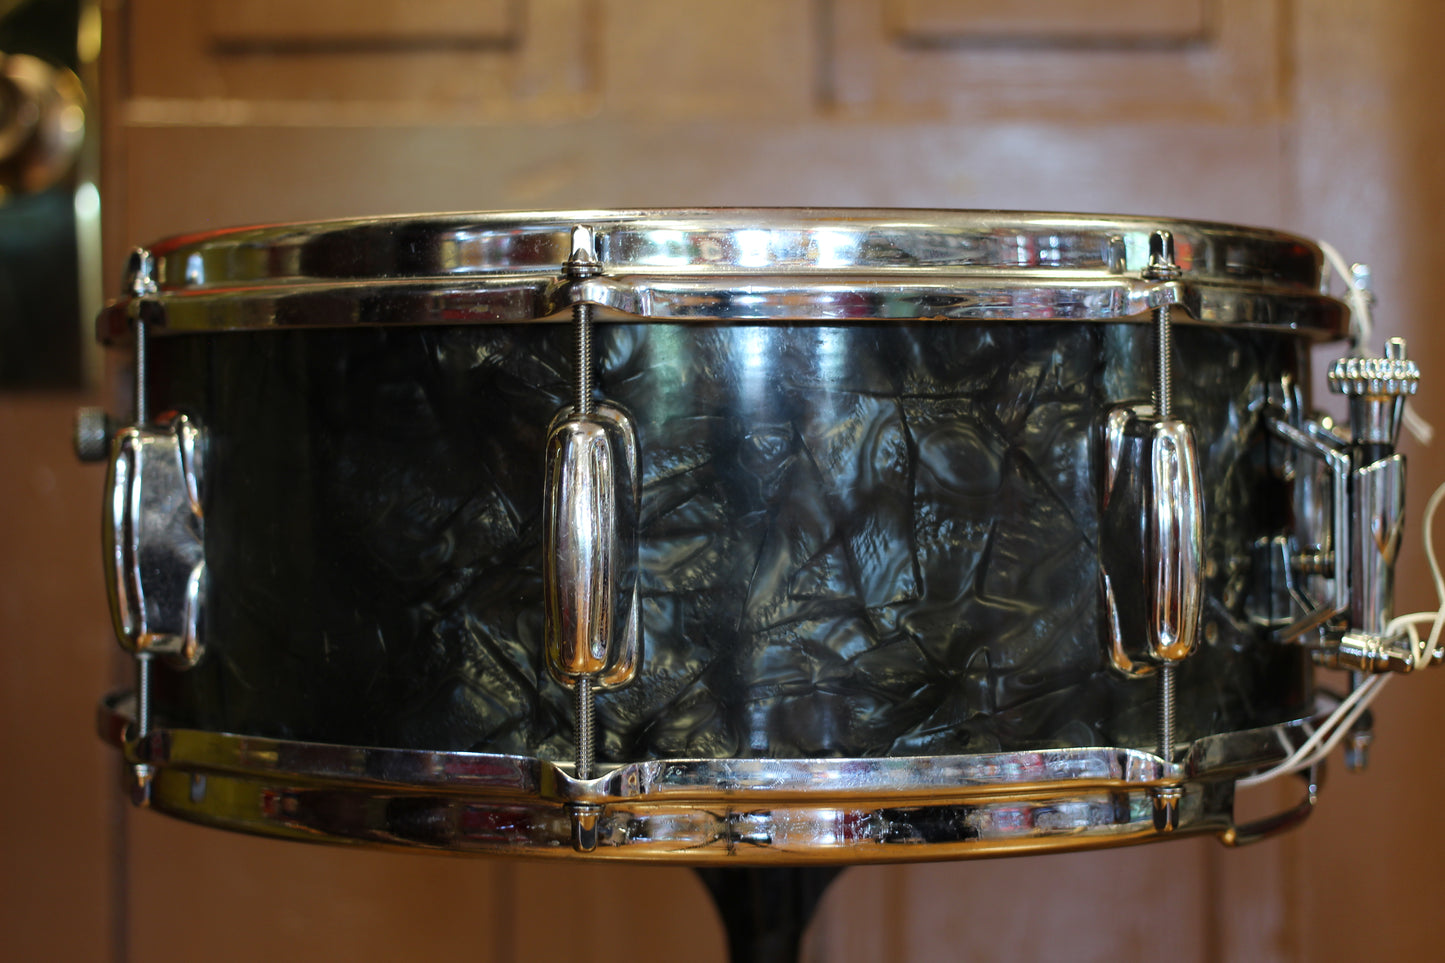 1960's Slingerland Radioking 5.5"x14" Solid Shell Snare Drum in Black Diamond Pearl